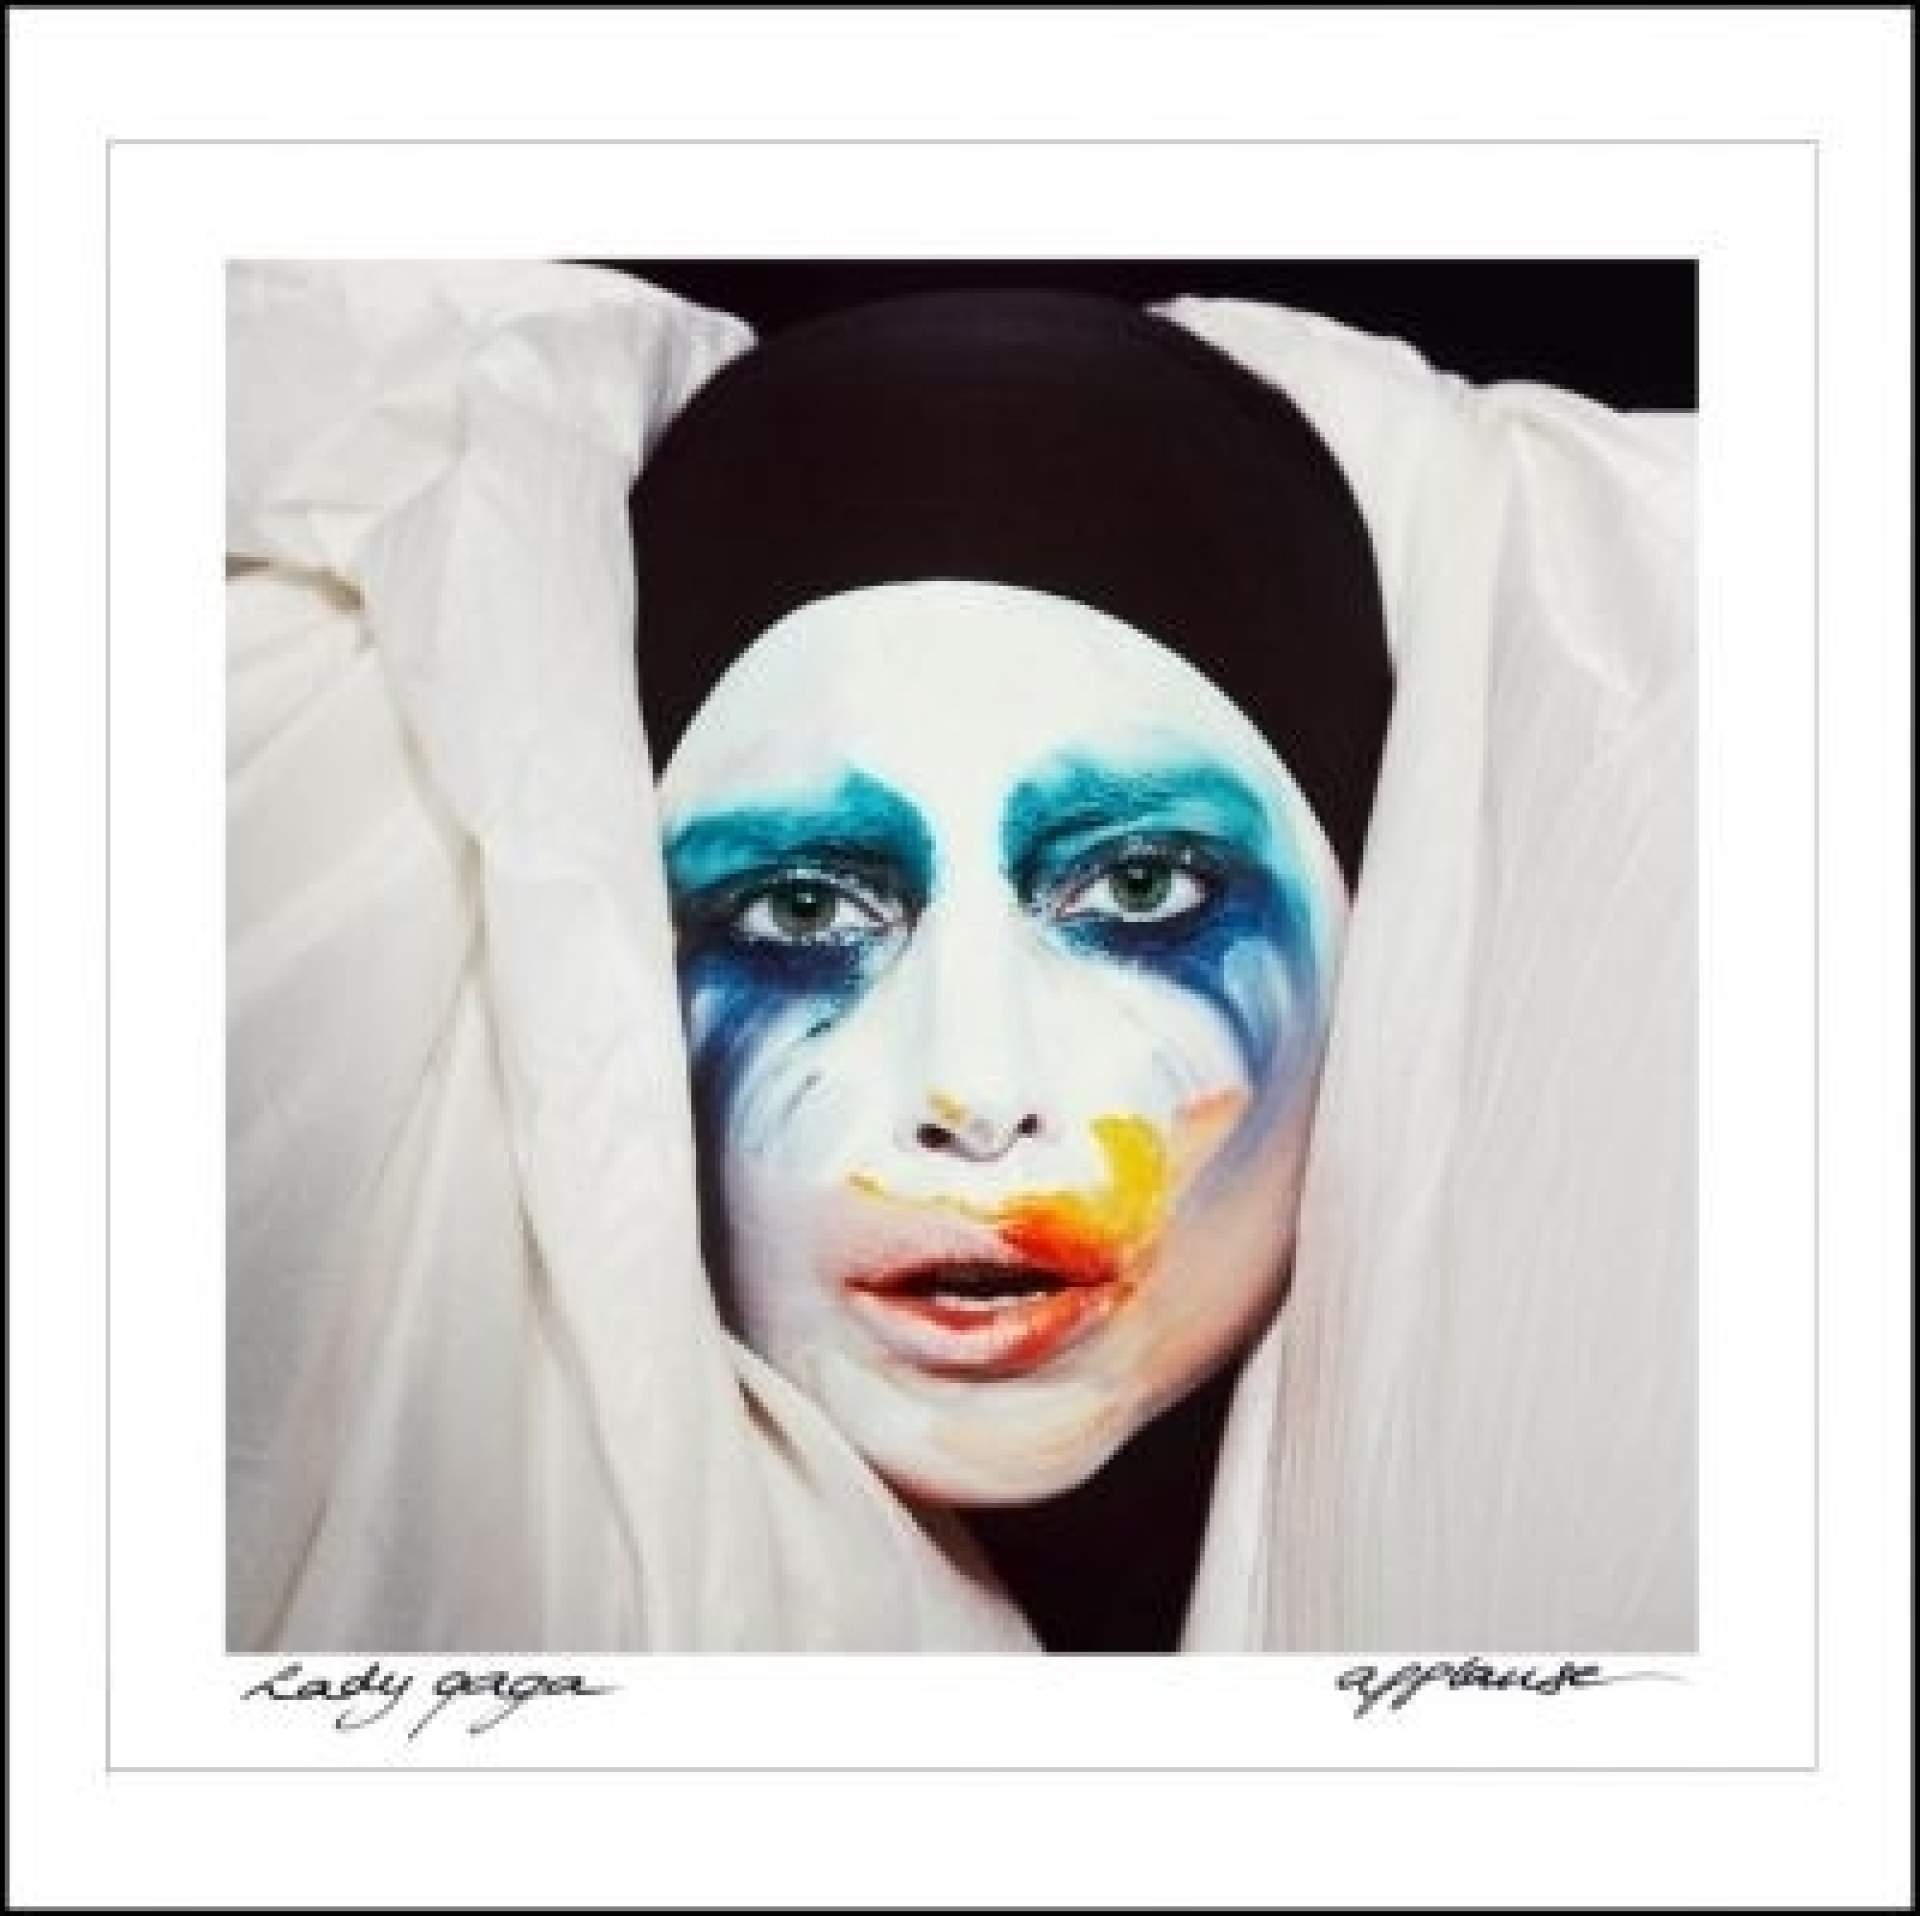 Lady Gaga, Artpop Album Cover, Makeup designed by Jeff Koons